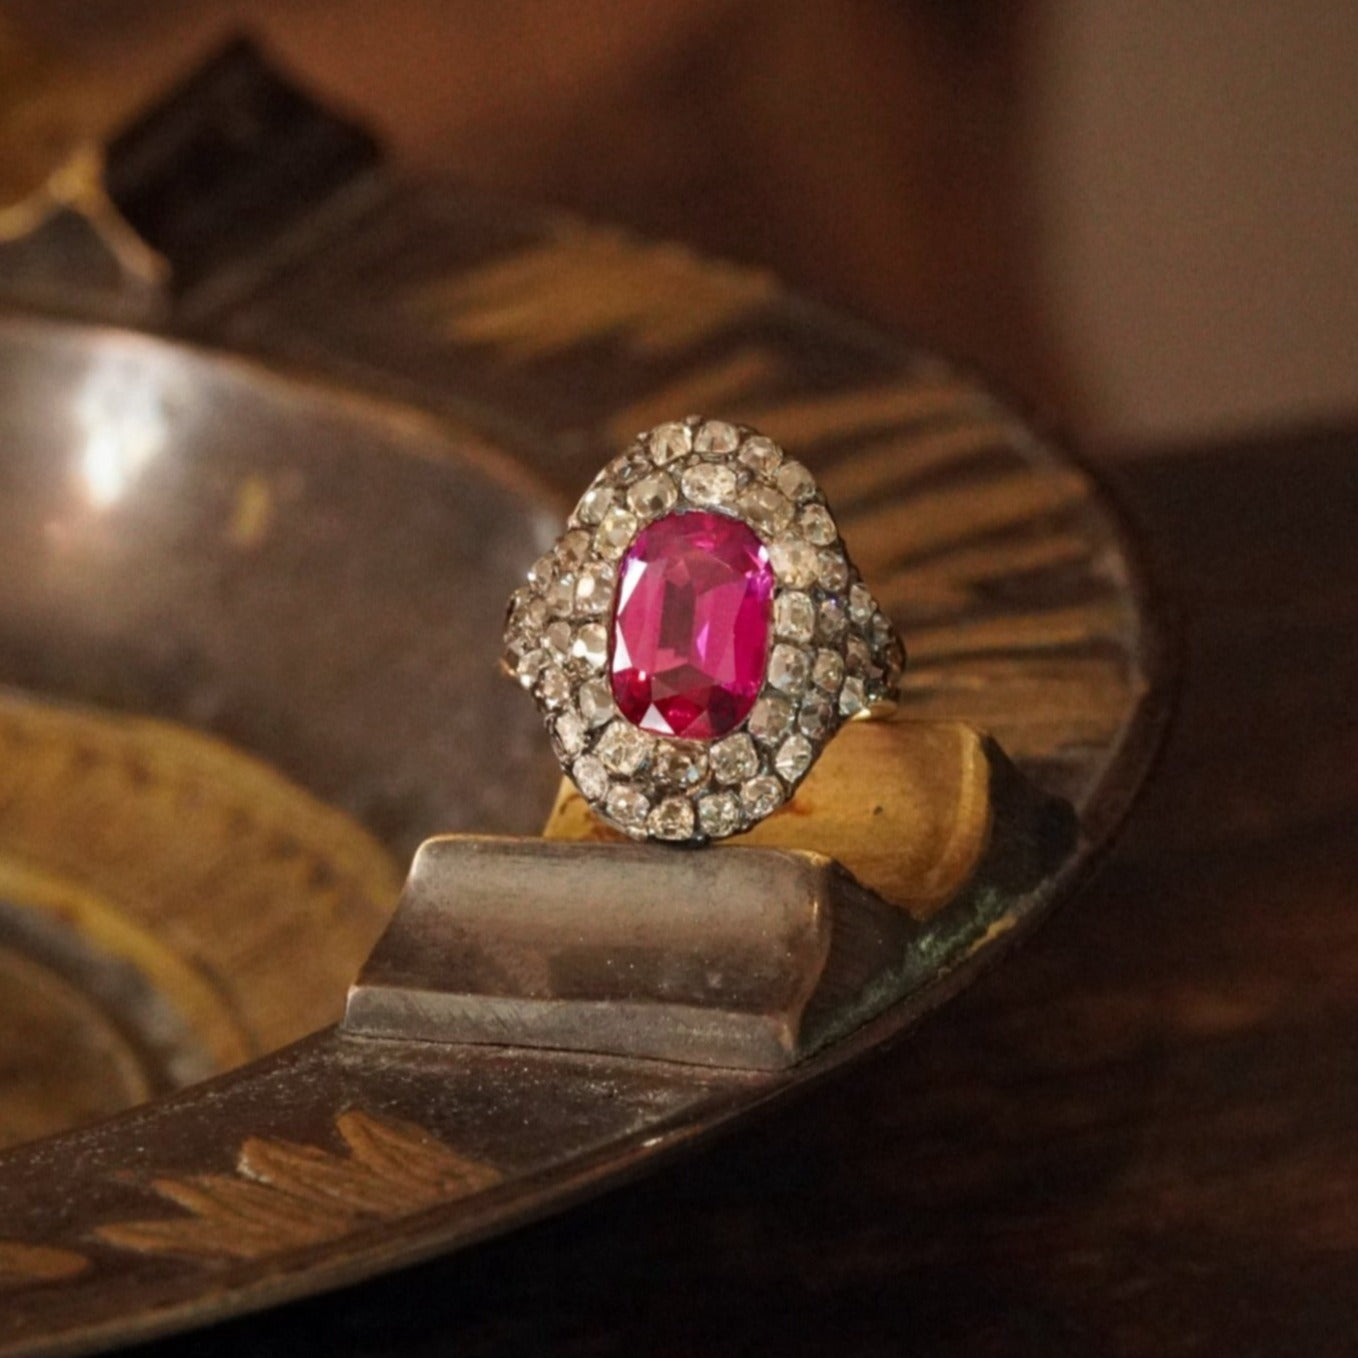  Jogani Exquisite Georgian Era Ring with a Glowing 3.12 CT No Heat Burmese Ruby and Lustrous Table-Cut Diamonds 4